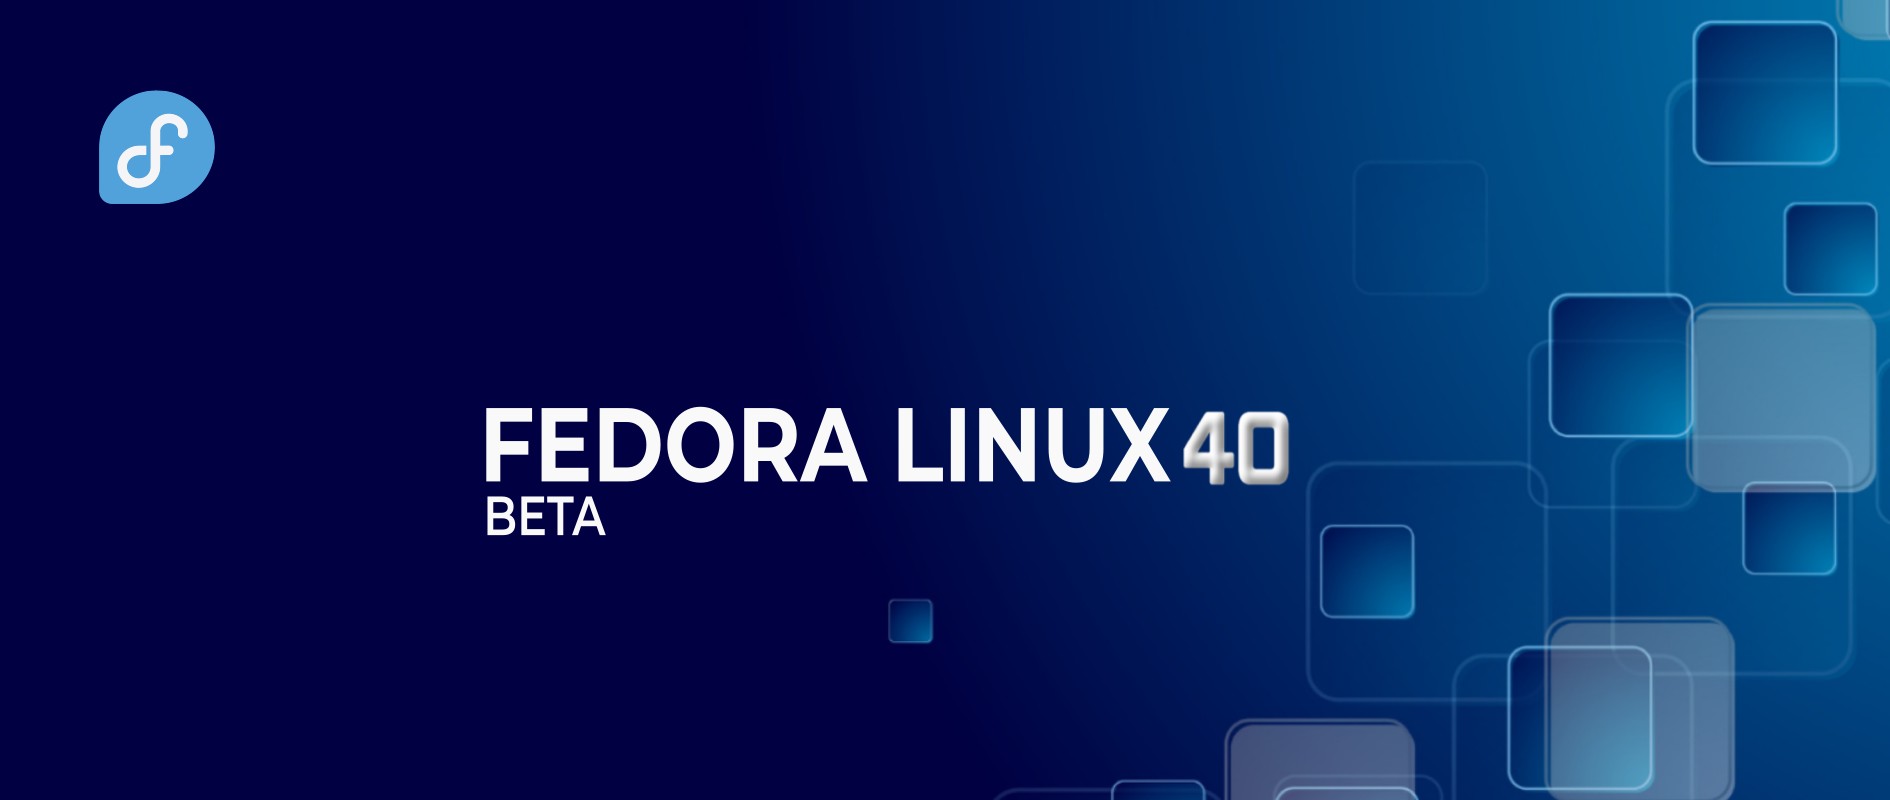 Announcing Fedora Linux 40 Beta - Fedora Magazine